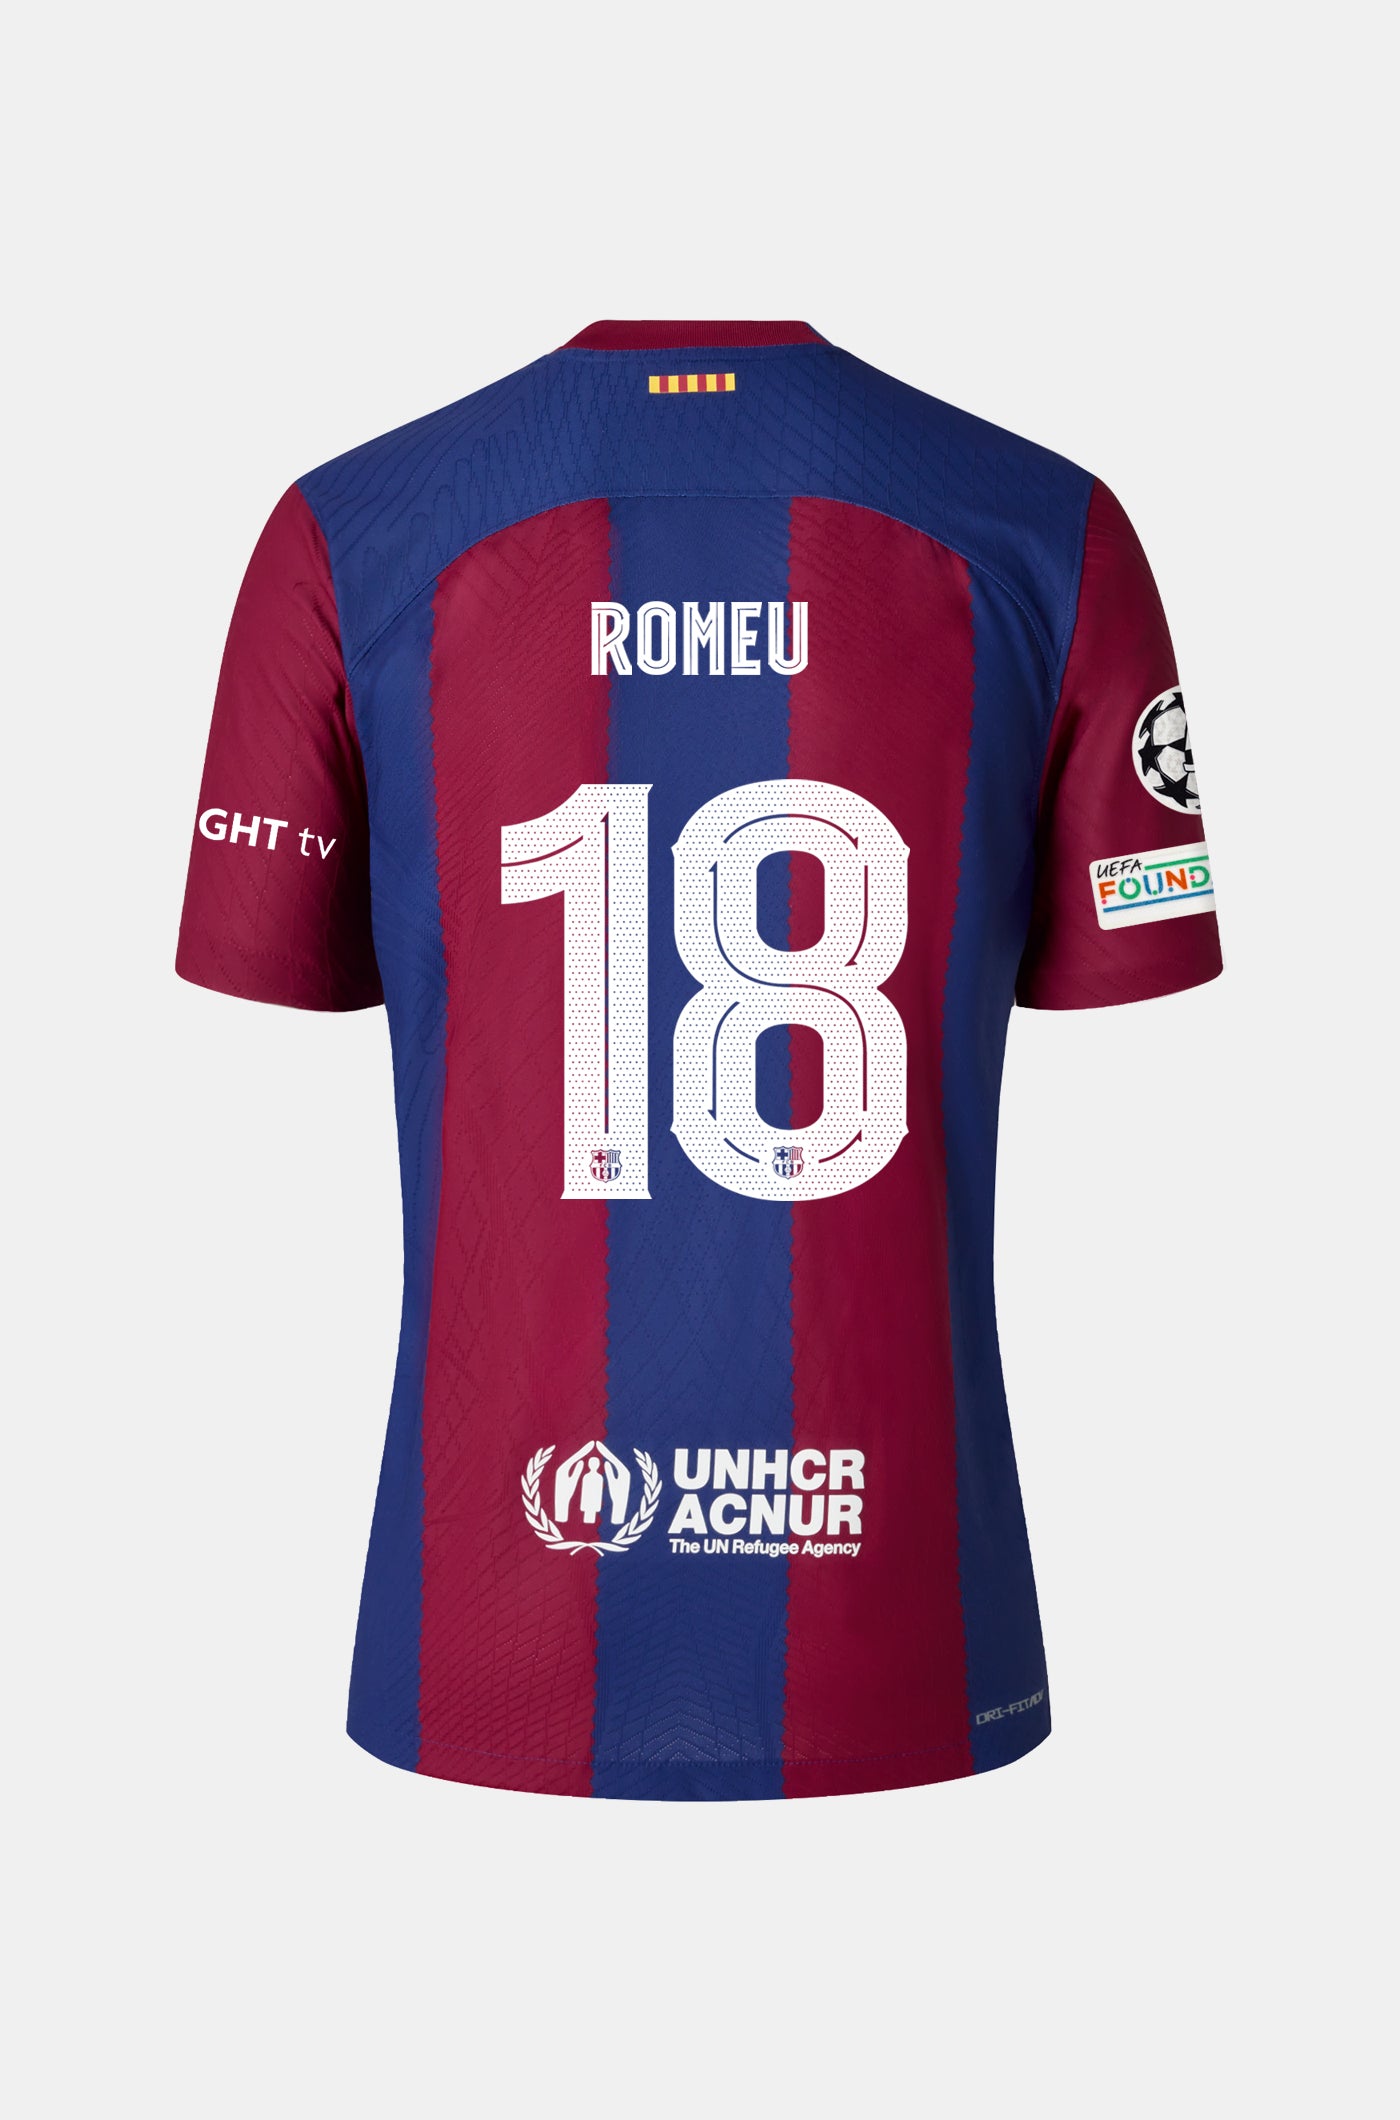 UCL FC Barcelona home shirt 23/24 Player's Edition  - ROMEU